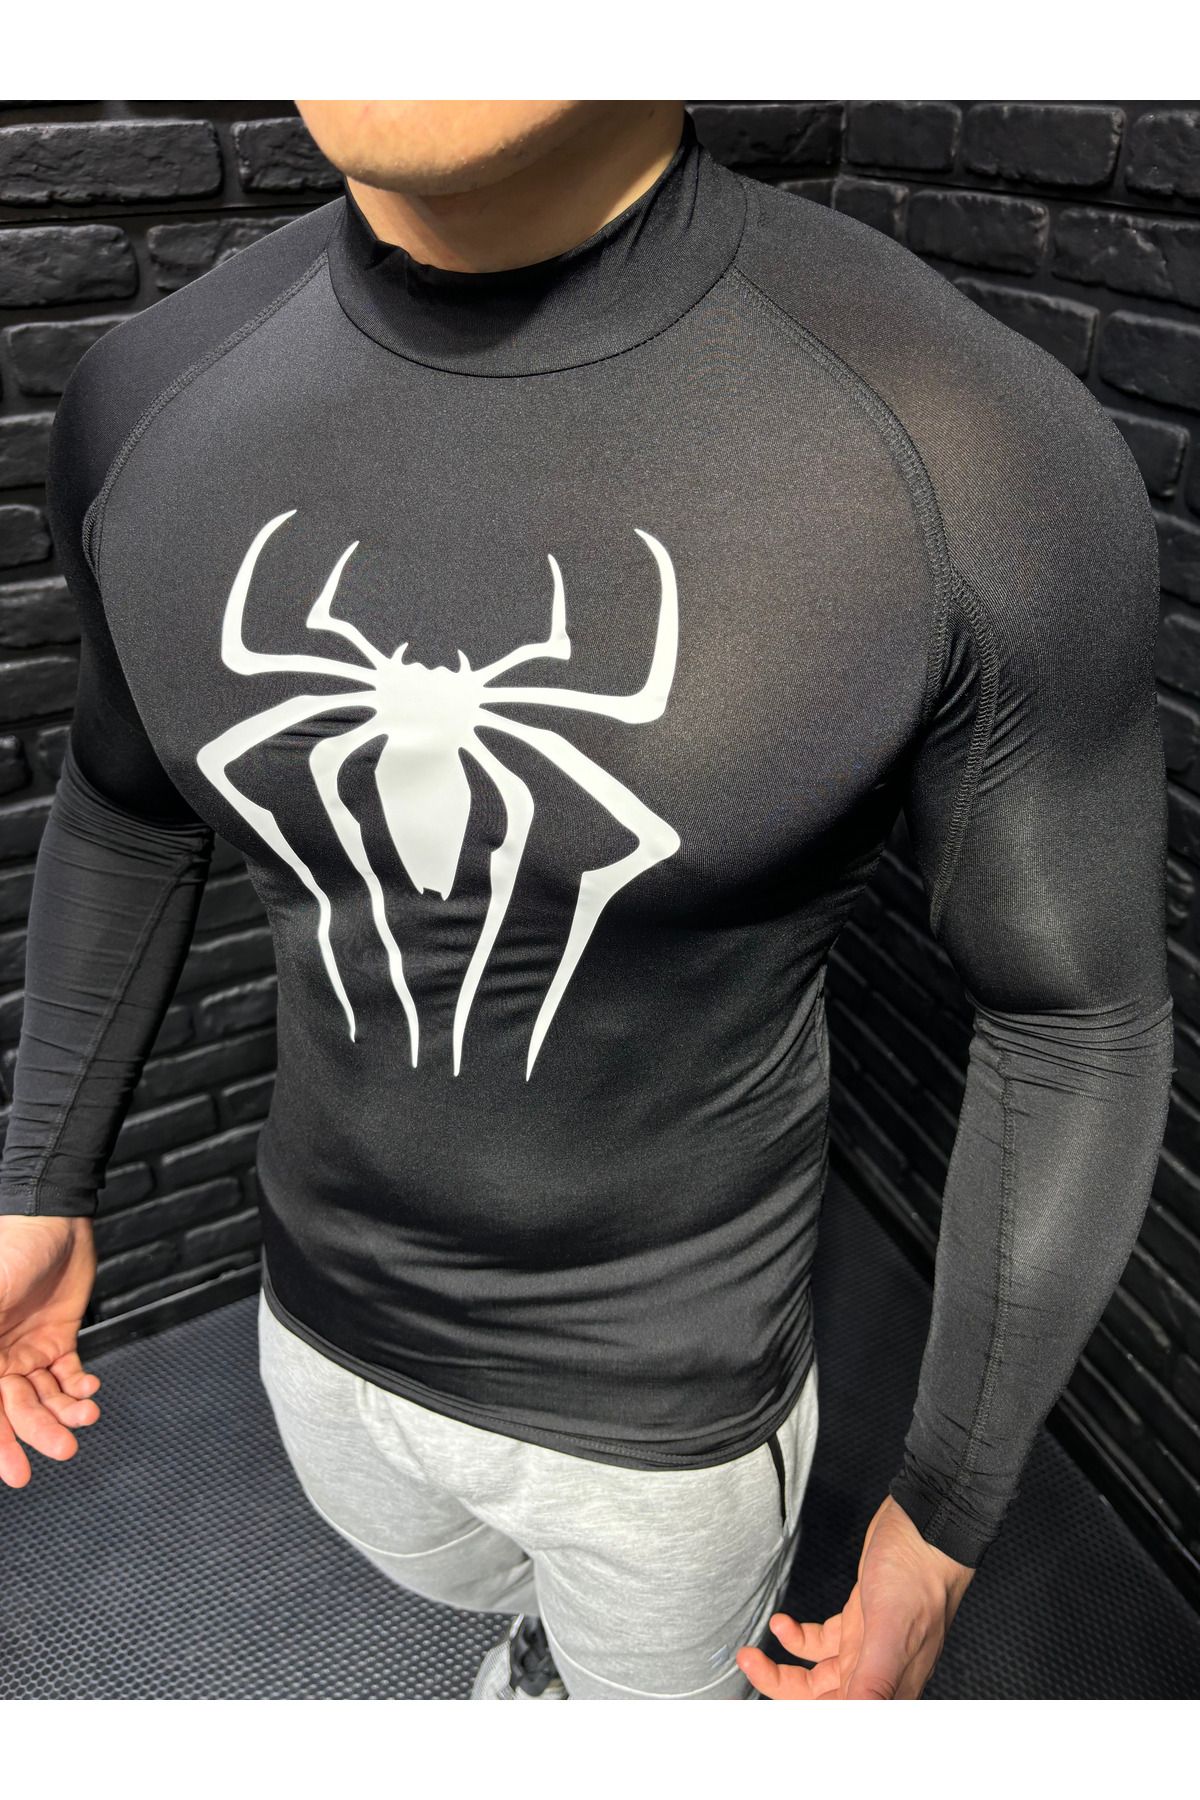 YHM Boğazlı Compression Body Spiderman Erkek Slim Fit Tam Beden Esnek Spor Body